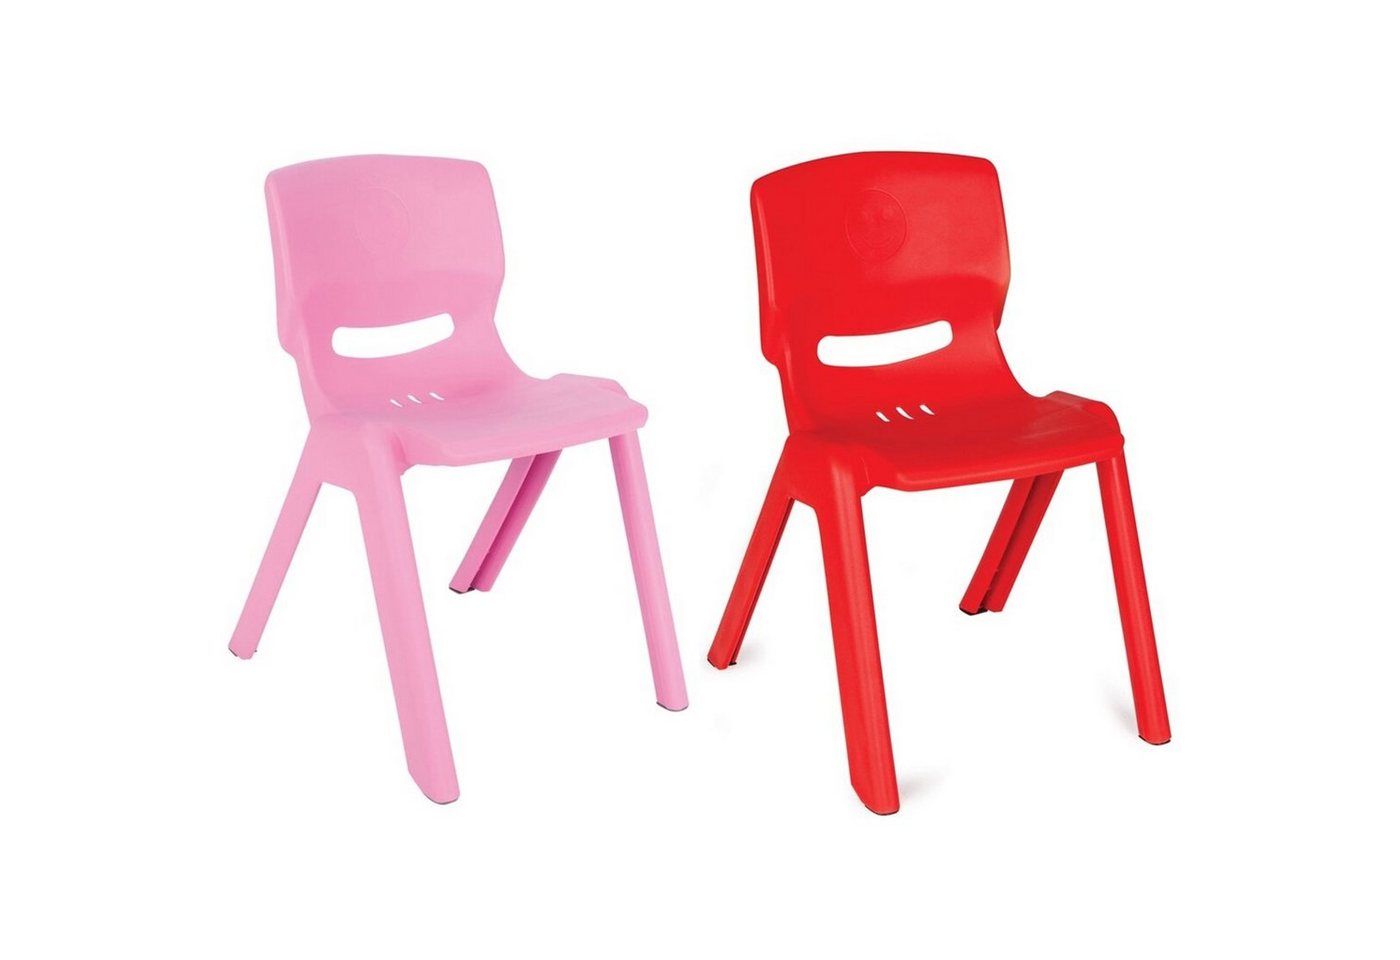 Siva Stuhl 20142-20144 2er Set Kinderstuhl Pink" + "Rot"" von Siva